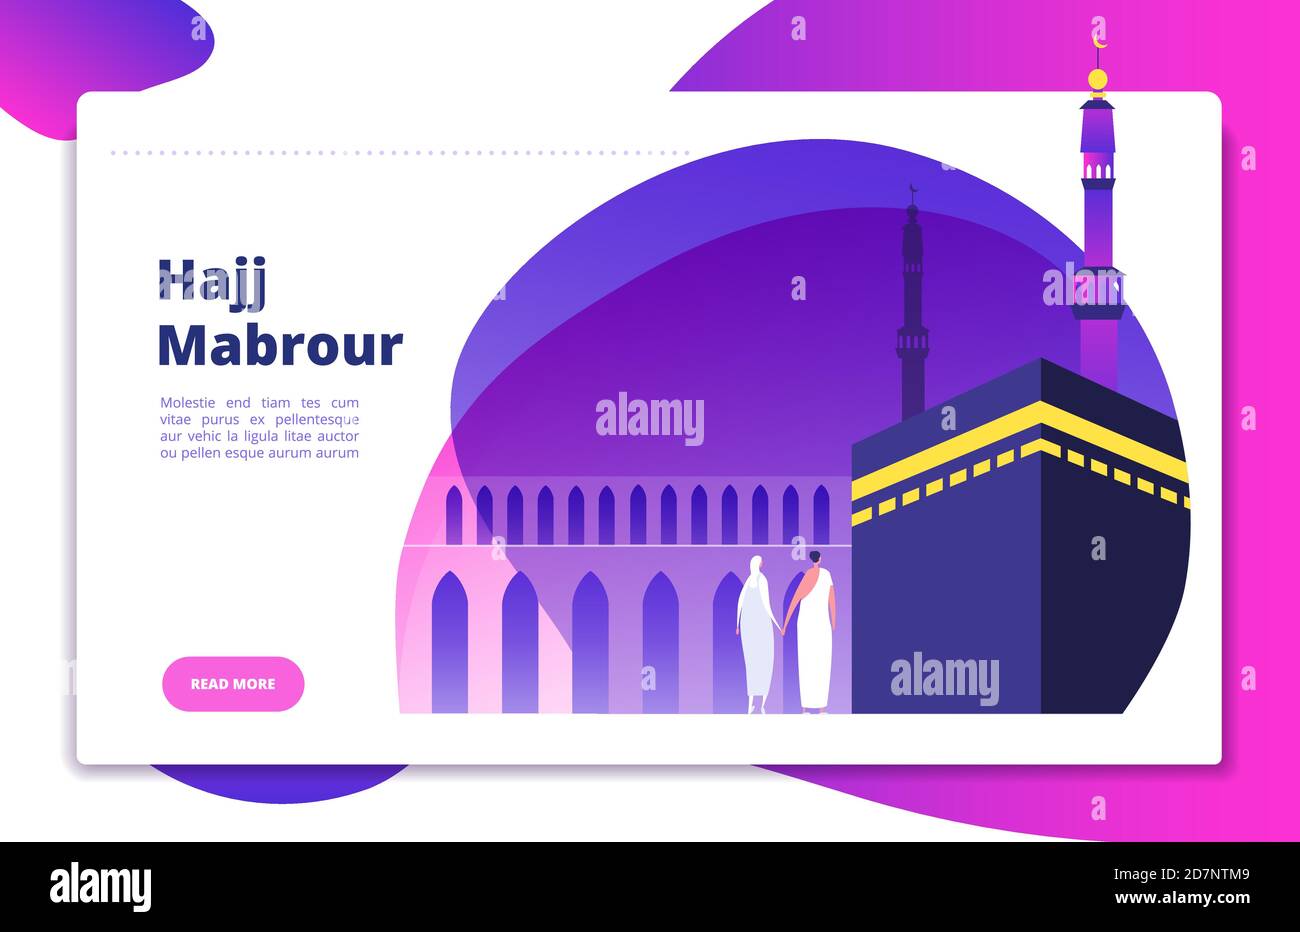 Hadsch-Konzept. Umrah hajj beten saudi Menschen beten mabrour muslime reisen makkah haram modernen flachen Vektor Website Design. Illustration von Mekka für Wallfahrt, haj muslim Stock Vektor